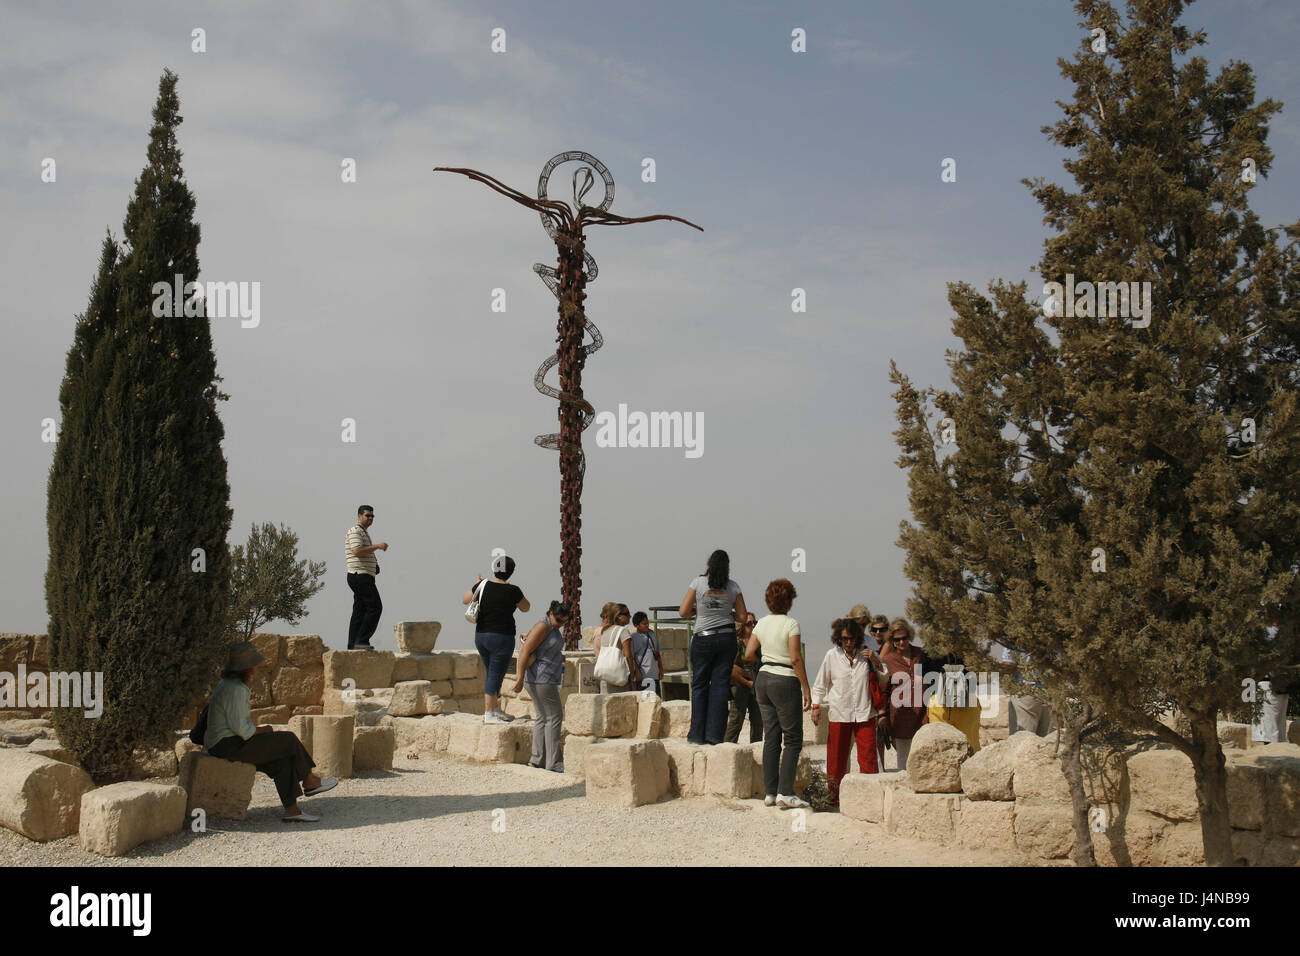 The Middle East, Jordan, mountain Nebo, cross, tourist, Stock Photo